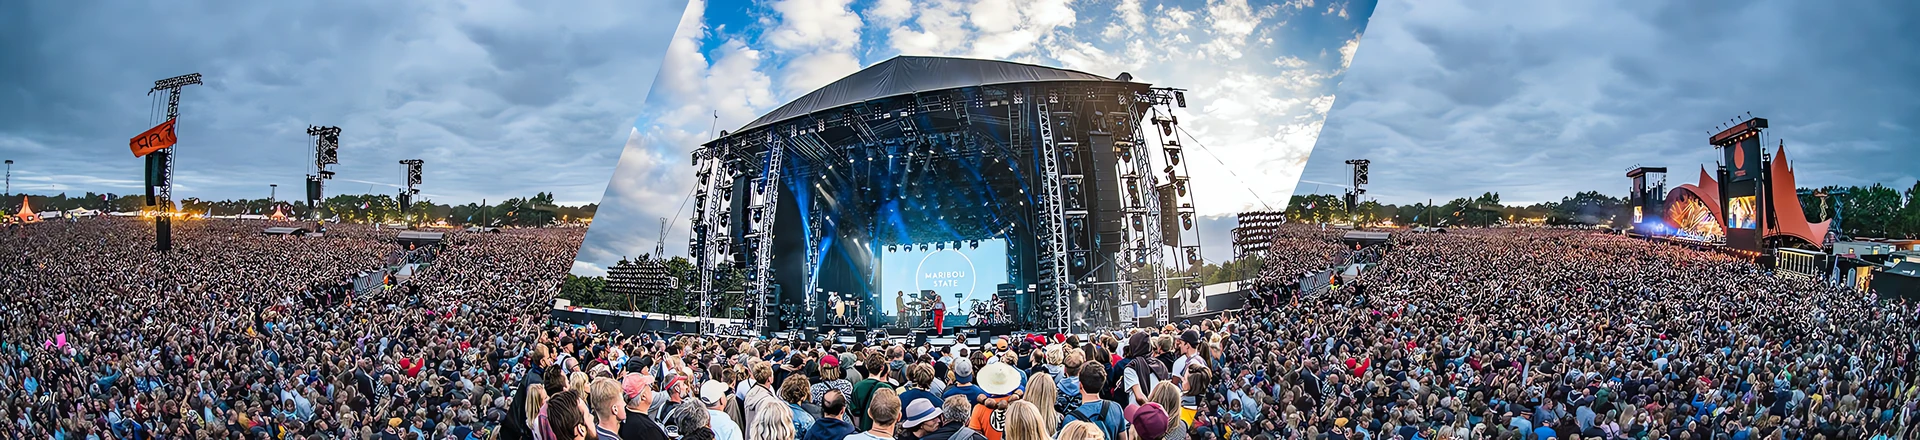 Meyer Sound na Roskilde Festival 2018